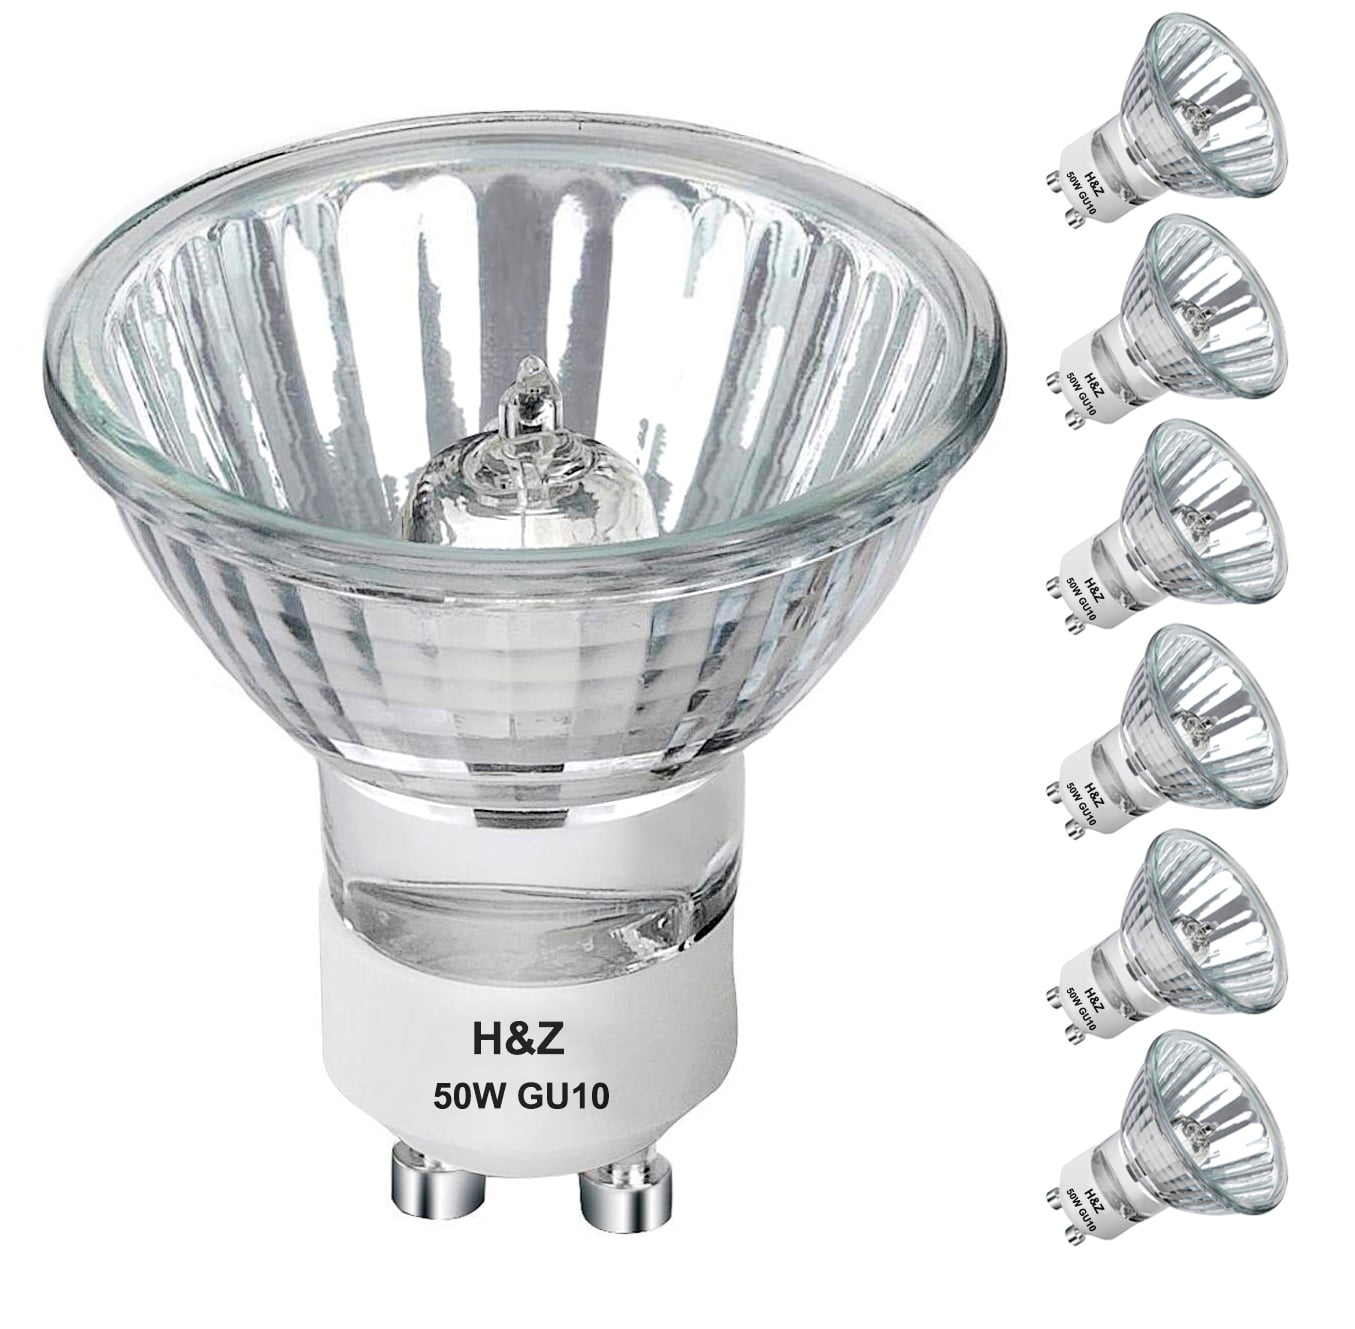 120 Volt/50 Watt 500 Lumens/MR16 Dimmable Light Bulbs,Warm White Energy Saving High Efficiency Halogen Indoor Flood Light Bulbs,Long Lasting Lifespan,6-Pack GU10 Halogen Light Bulb 